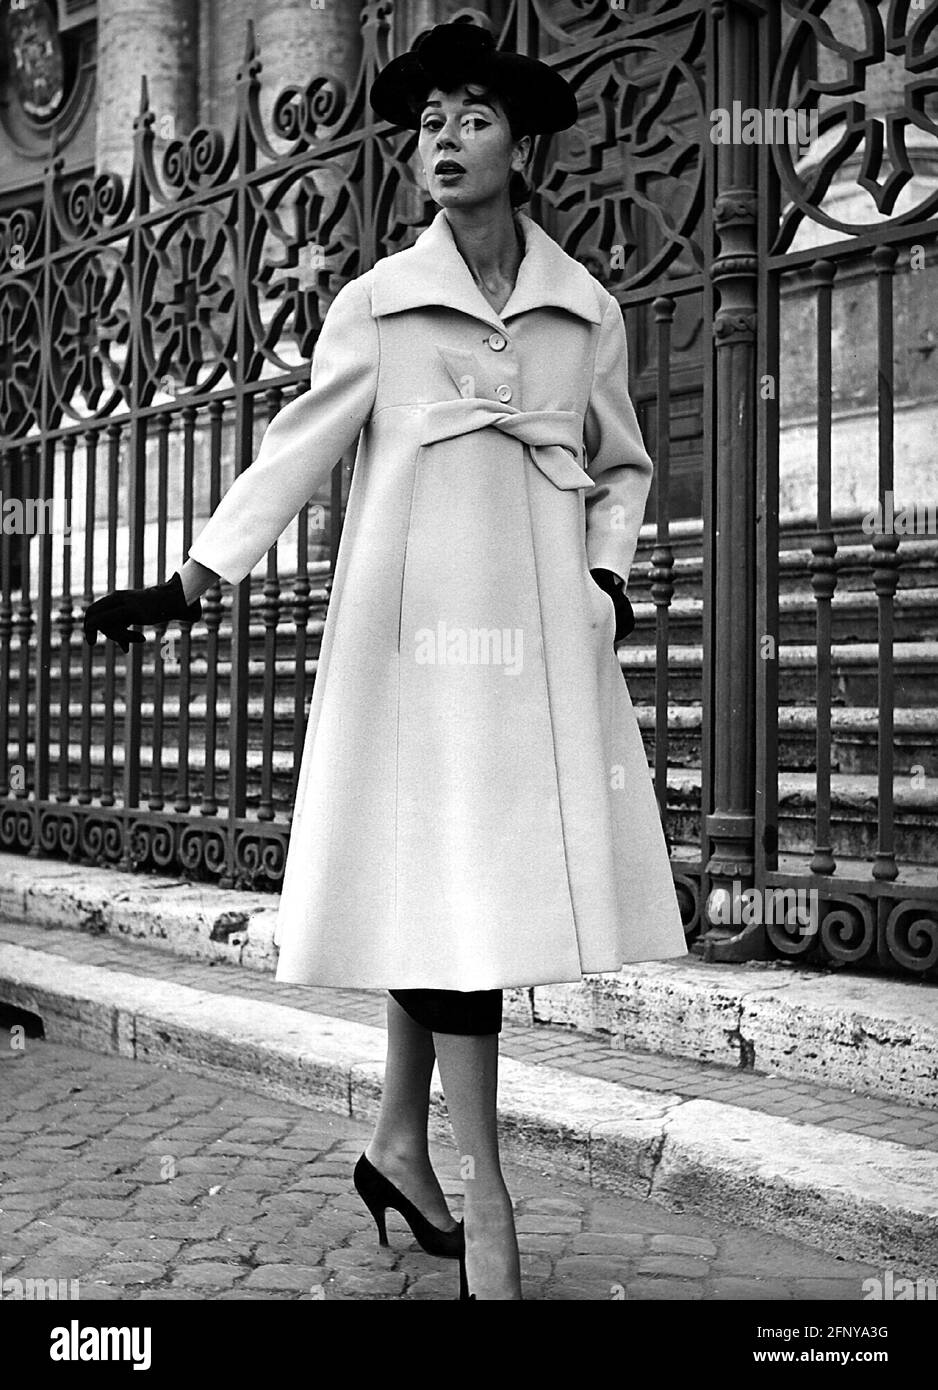 Mode, 50er Jahre, Damenmode, Frau trägt Mantel,  ZUSÄTZLICHE-RIGHTS-CLEARANCE-INFO-NOT-AVAILABLE Stockfotografie - Alamy